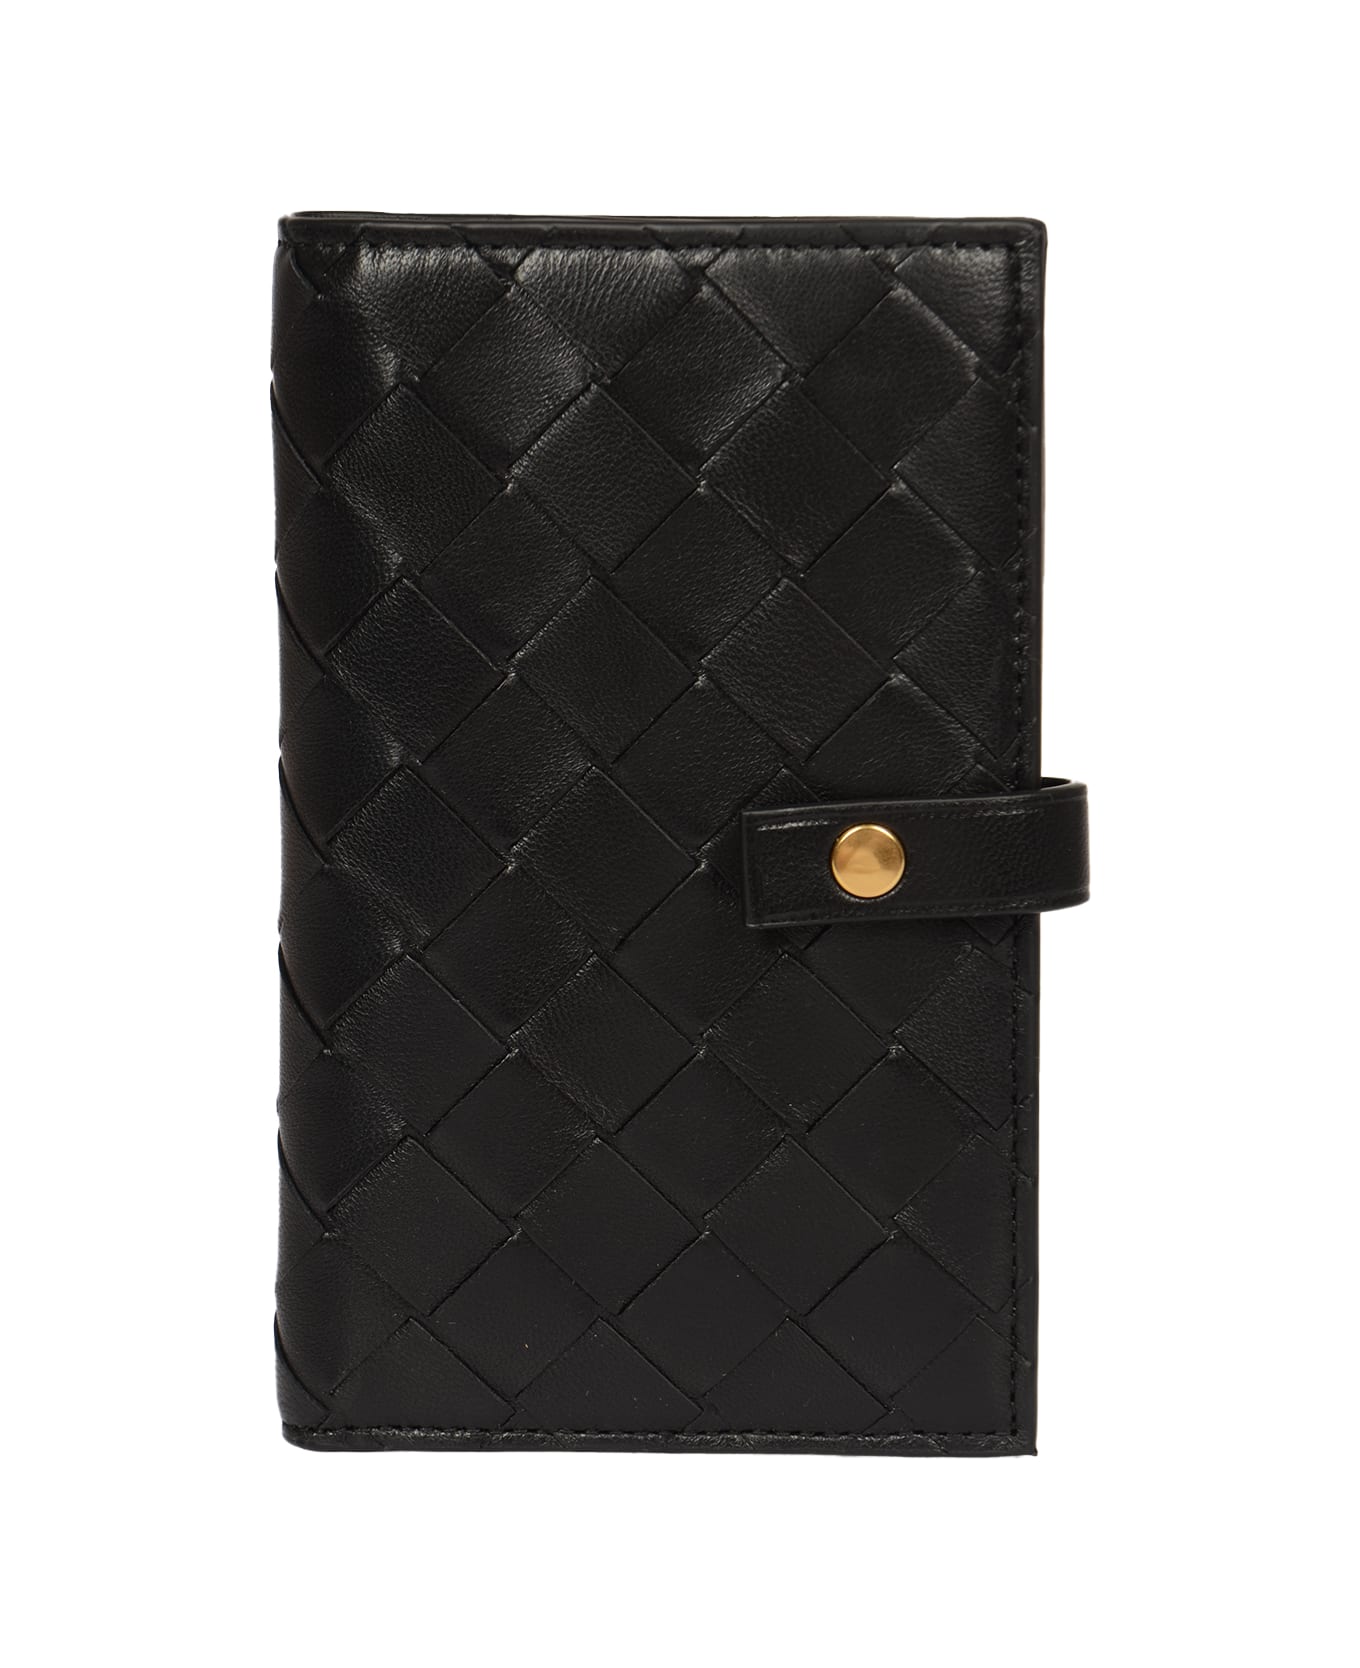 Bottega Veneta Weave Buttoned Wallet - Black/Gold